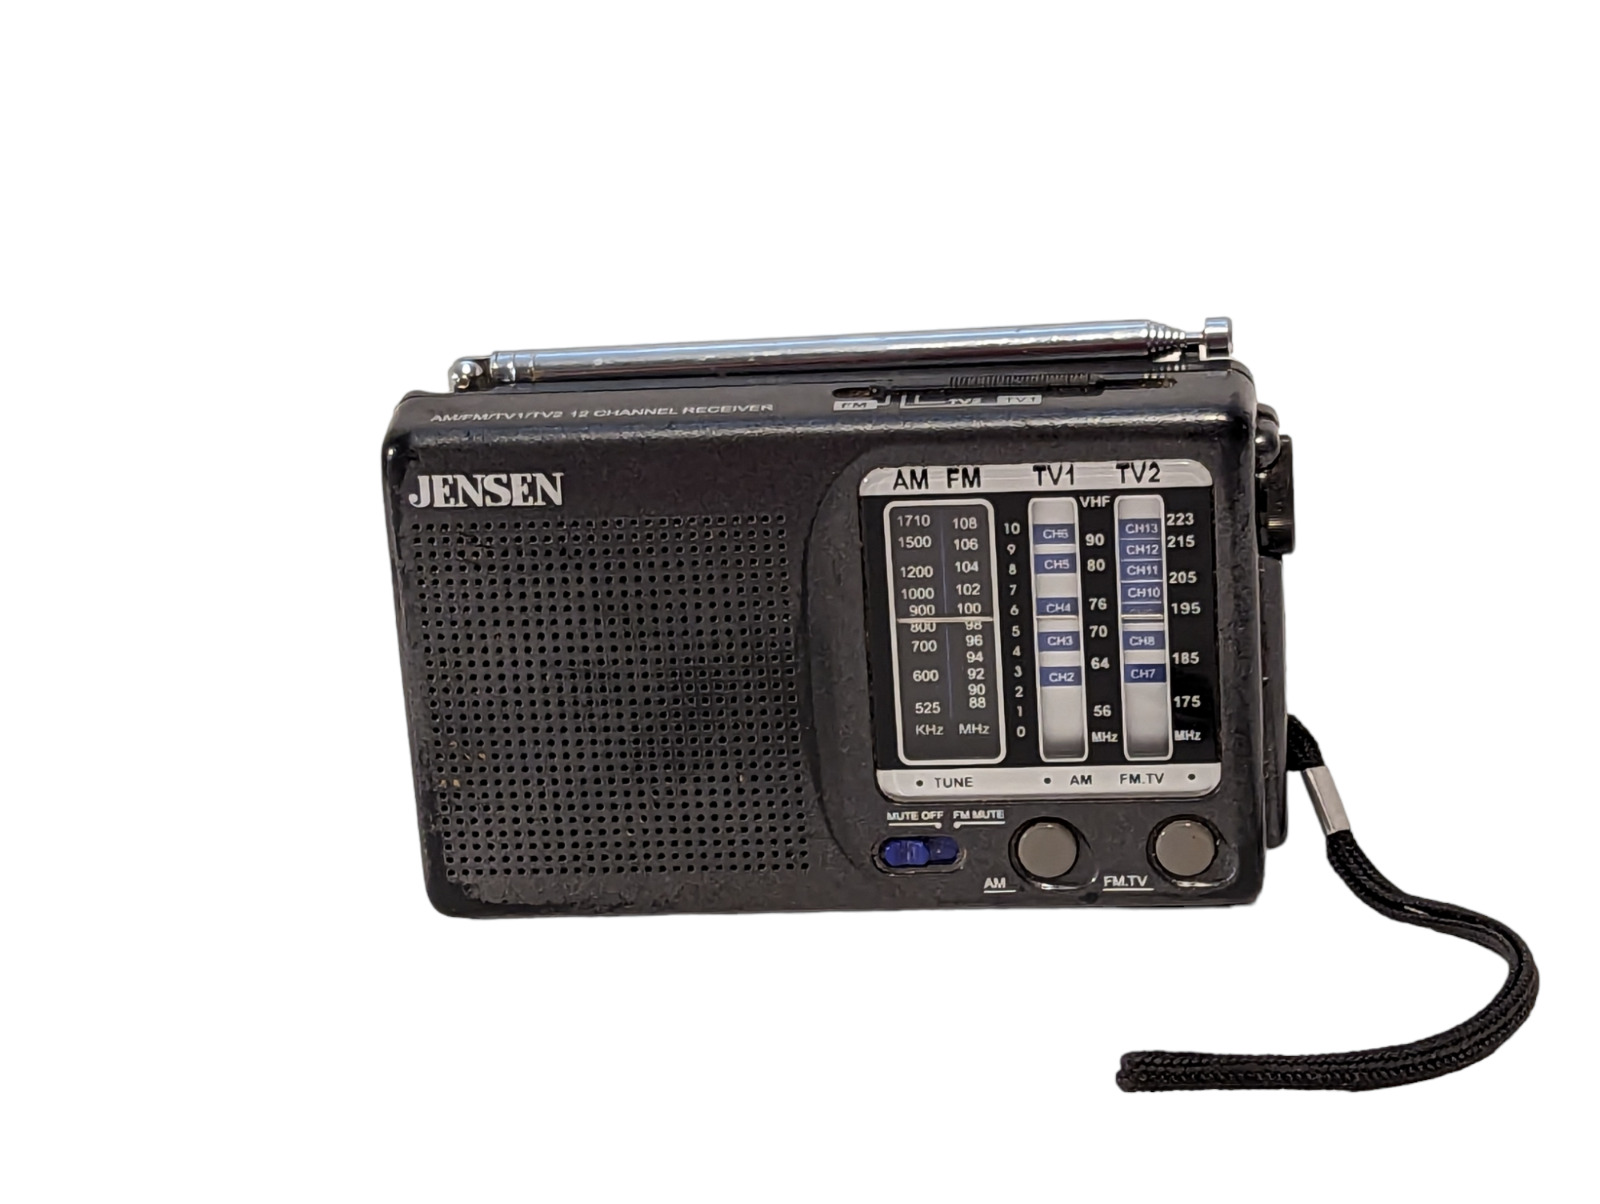 Jensen Model MR-400  Multi Band Pocket Radio AM/FM/ TV working